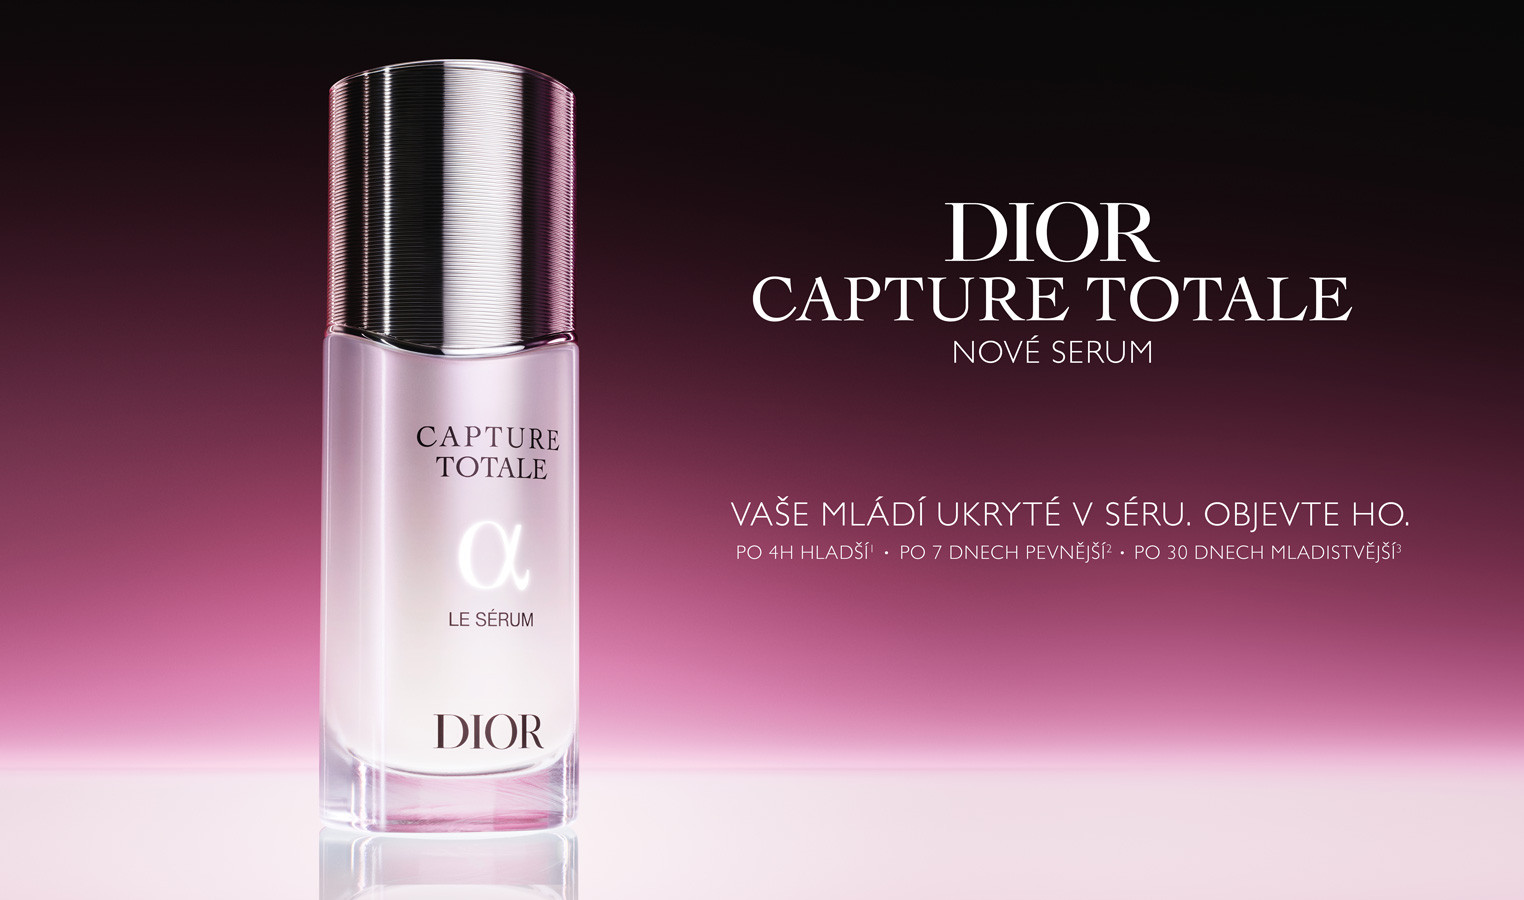 Dior - Le serum